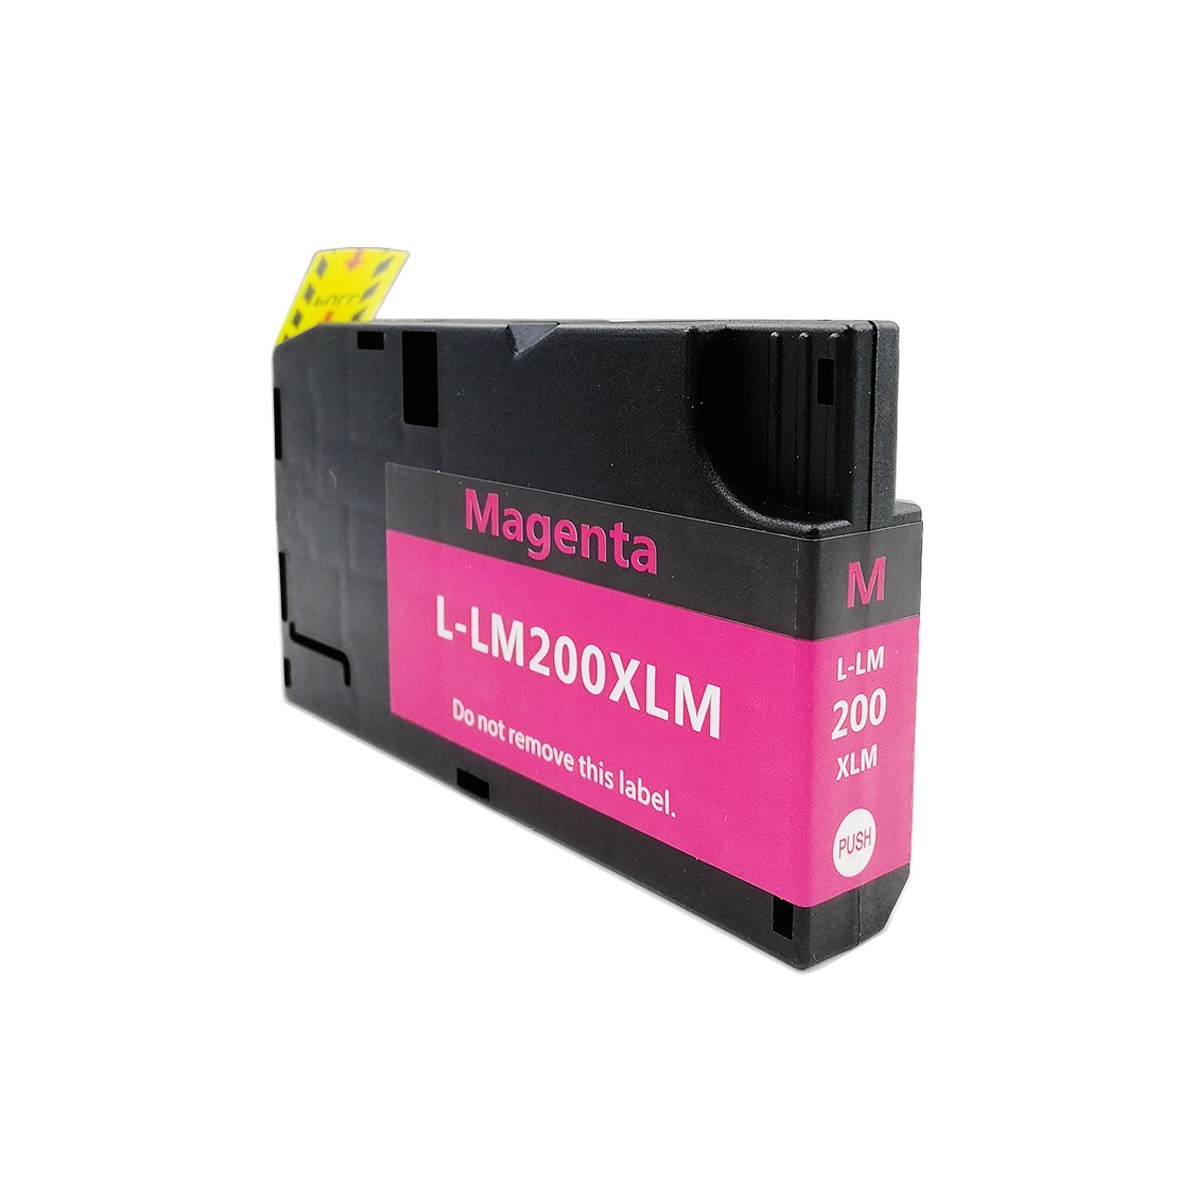 1 Cartouche compatible Lexmark L-LM200XL Magenta